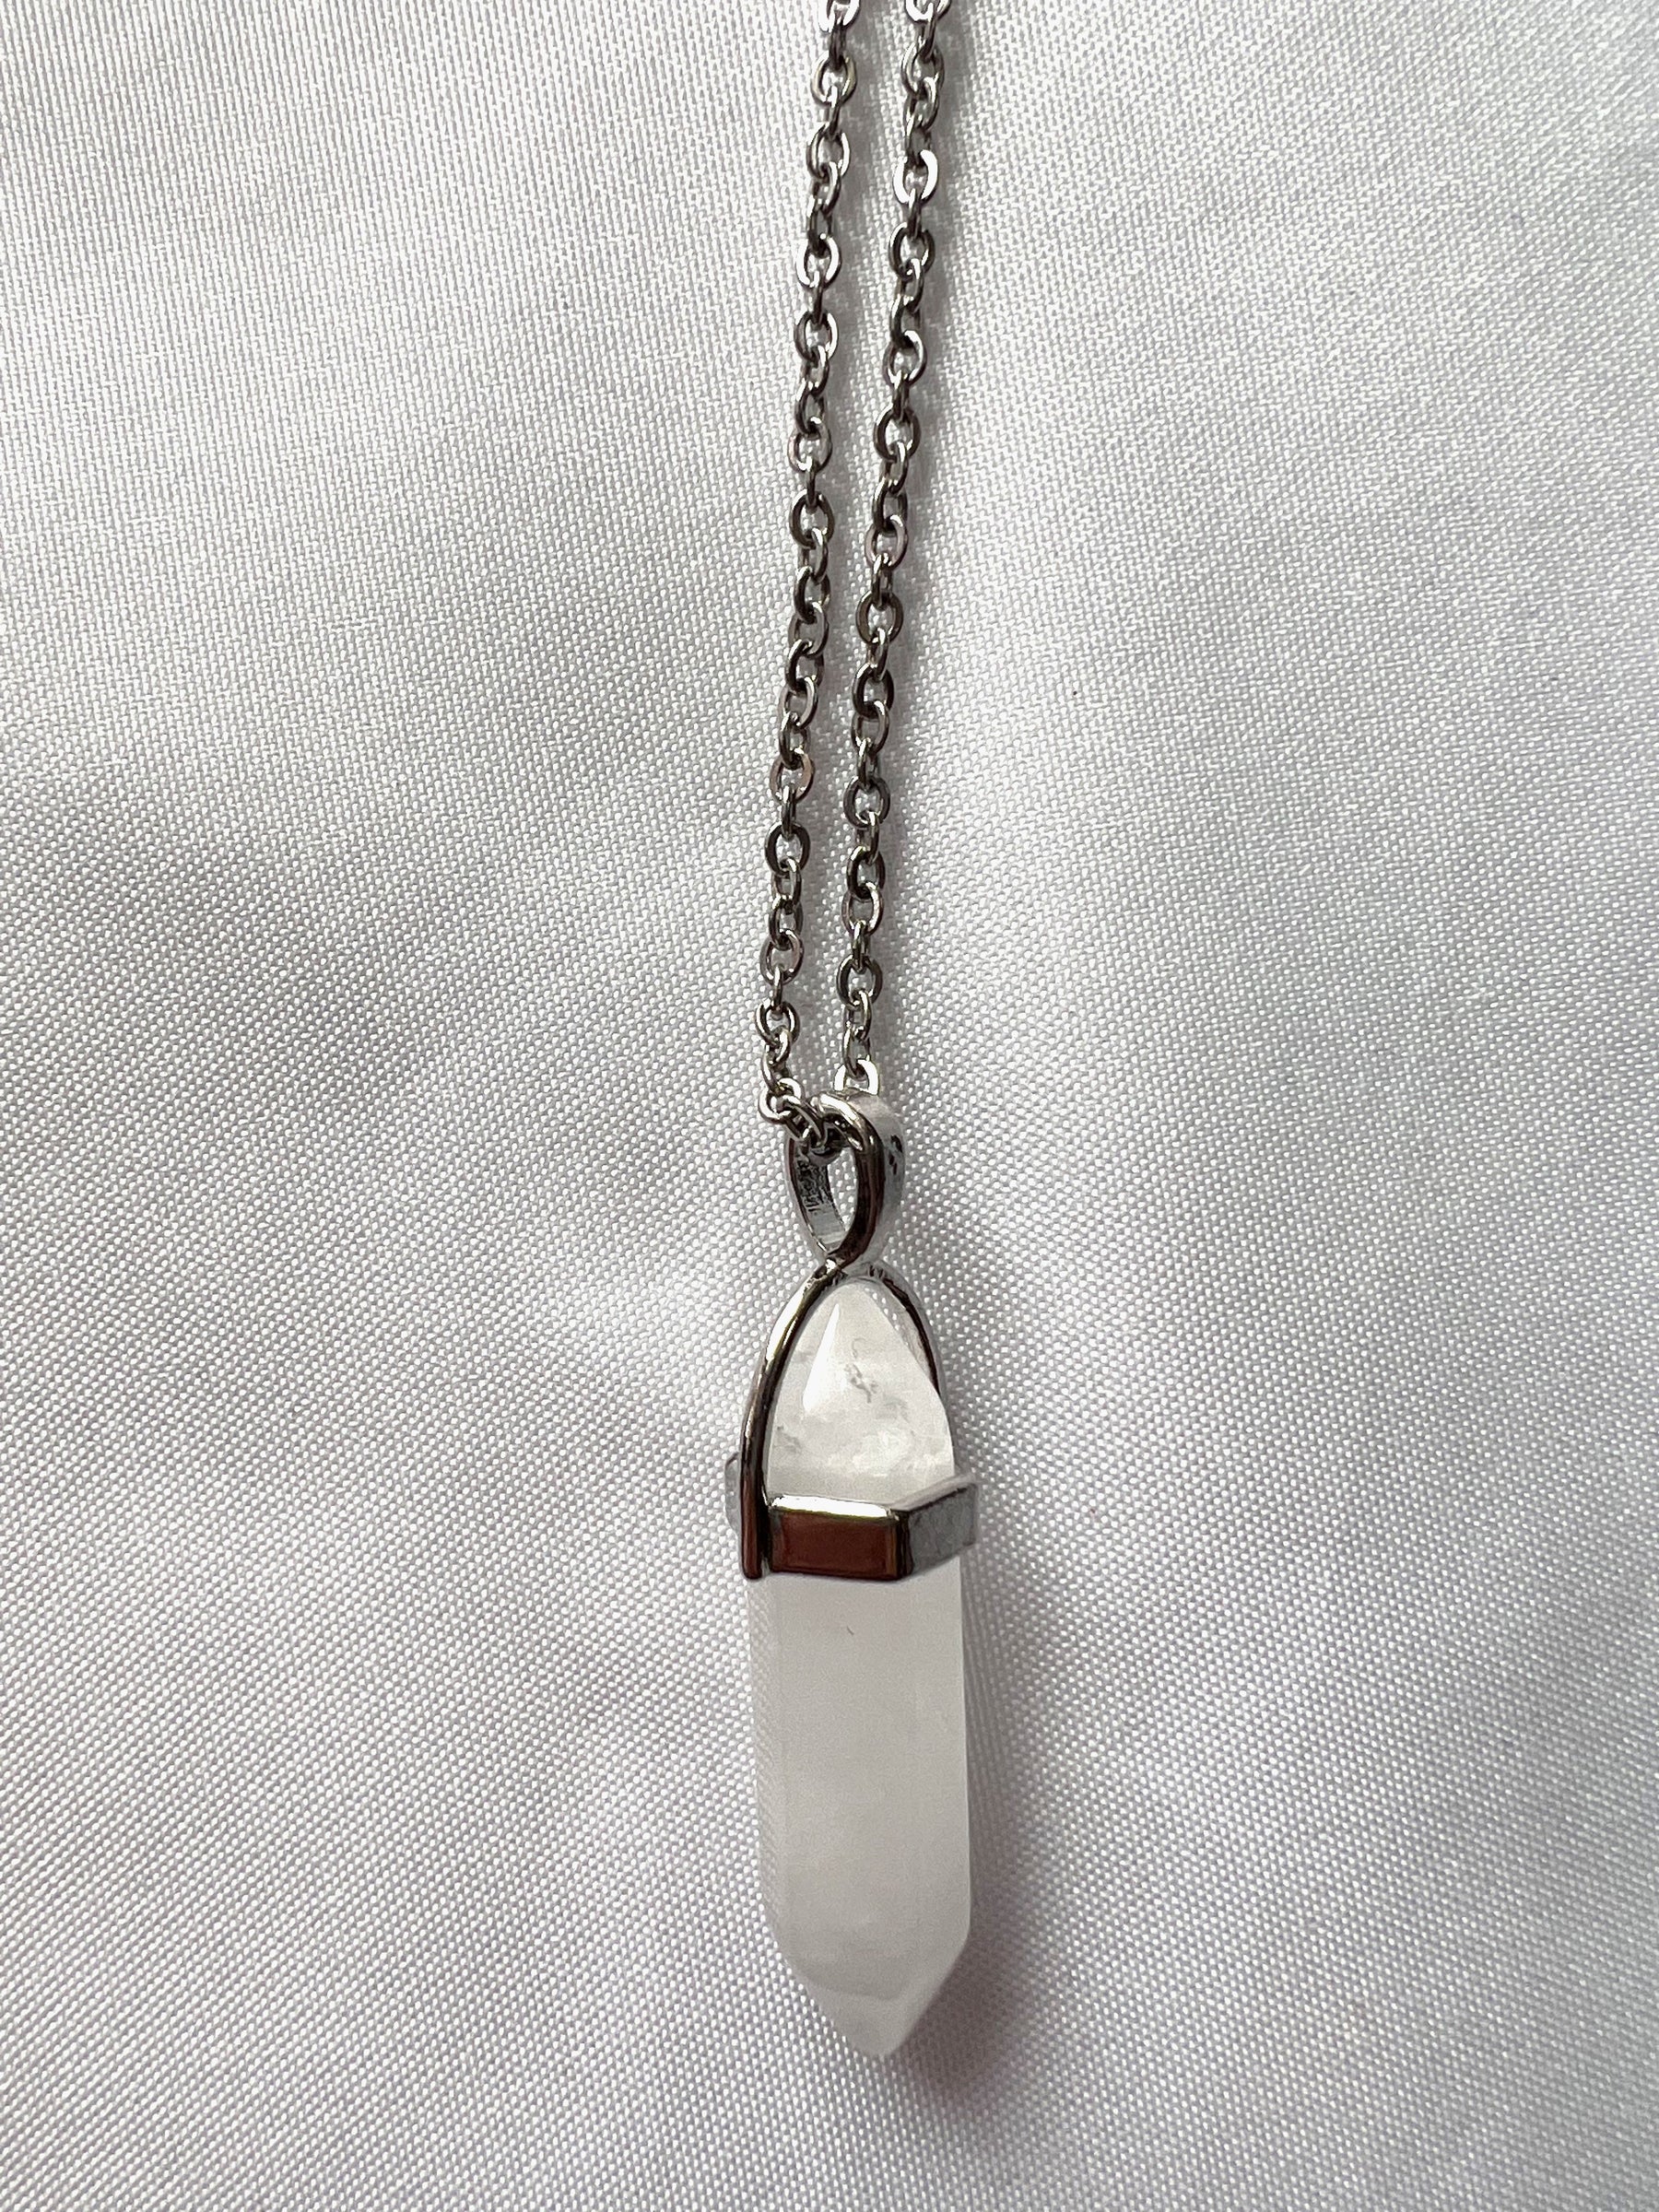 Clear Quartz crystal pendulum necklace